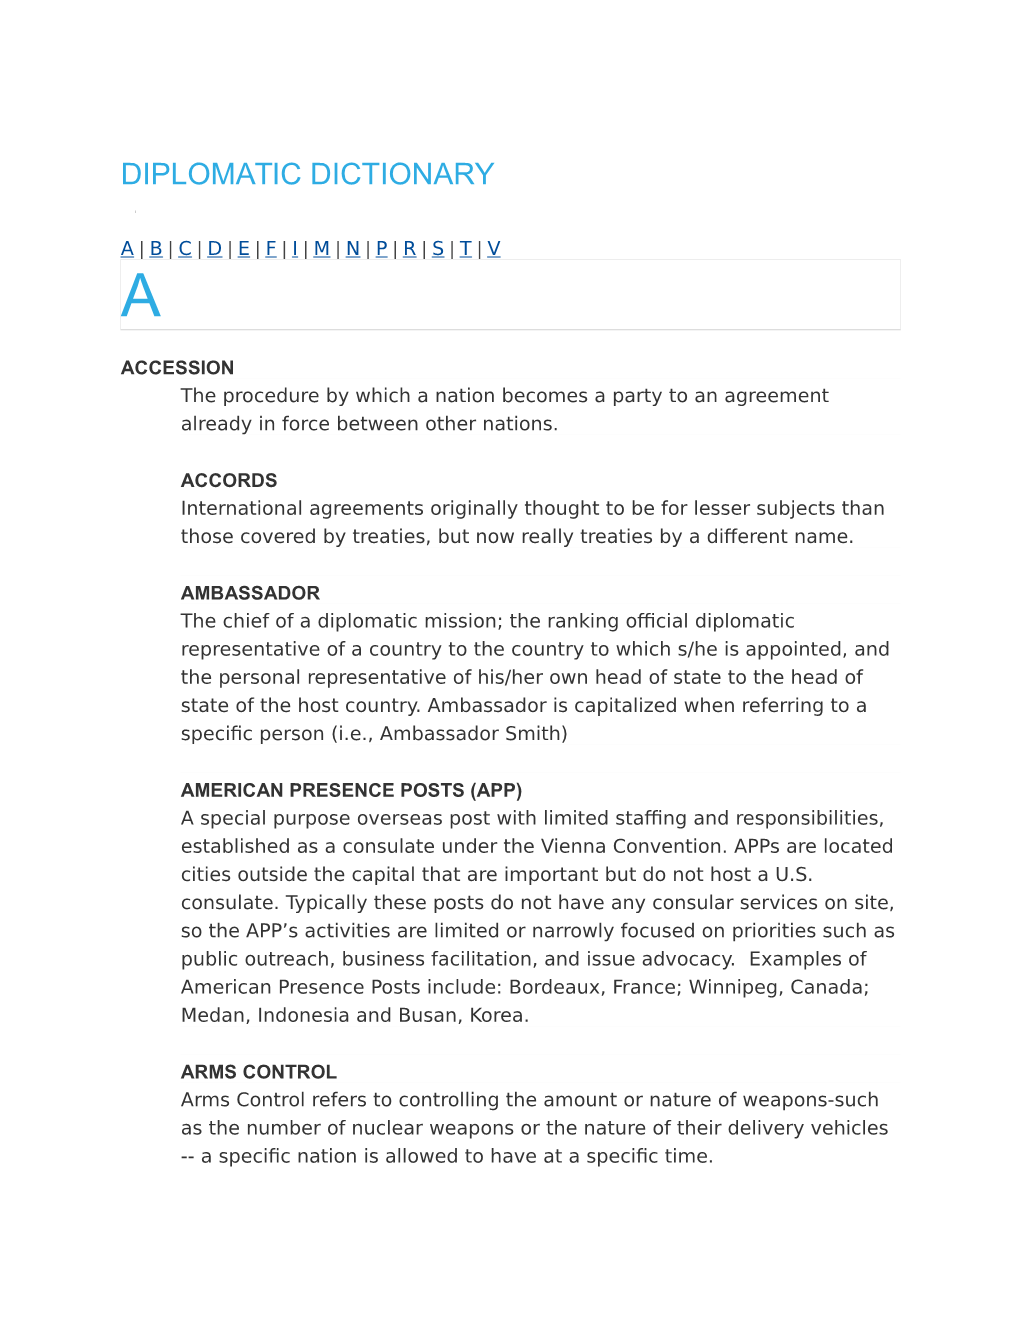 Diplomatic Dictionary